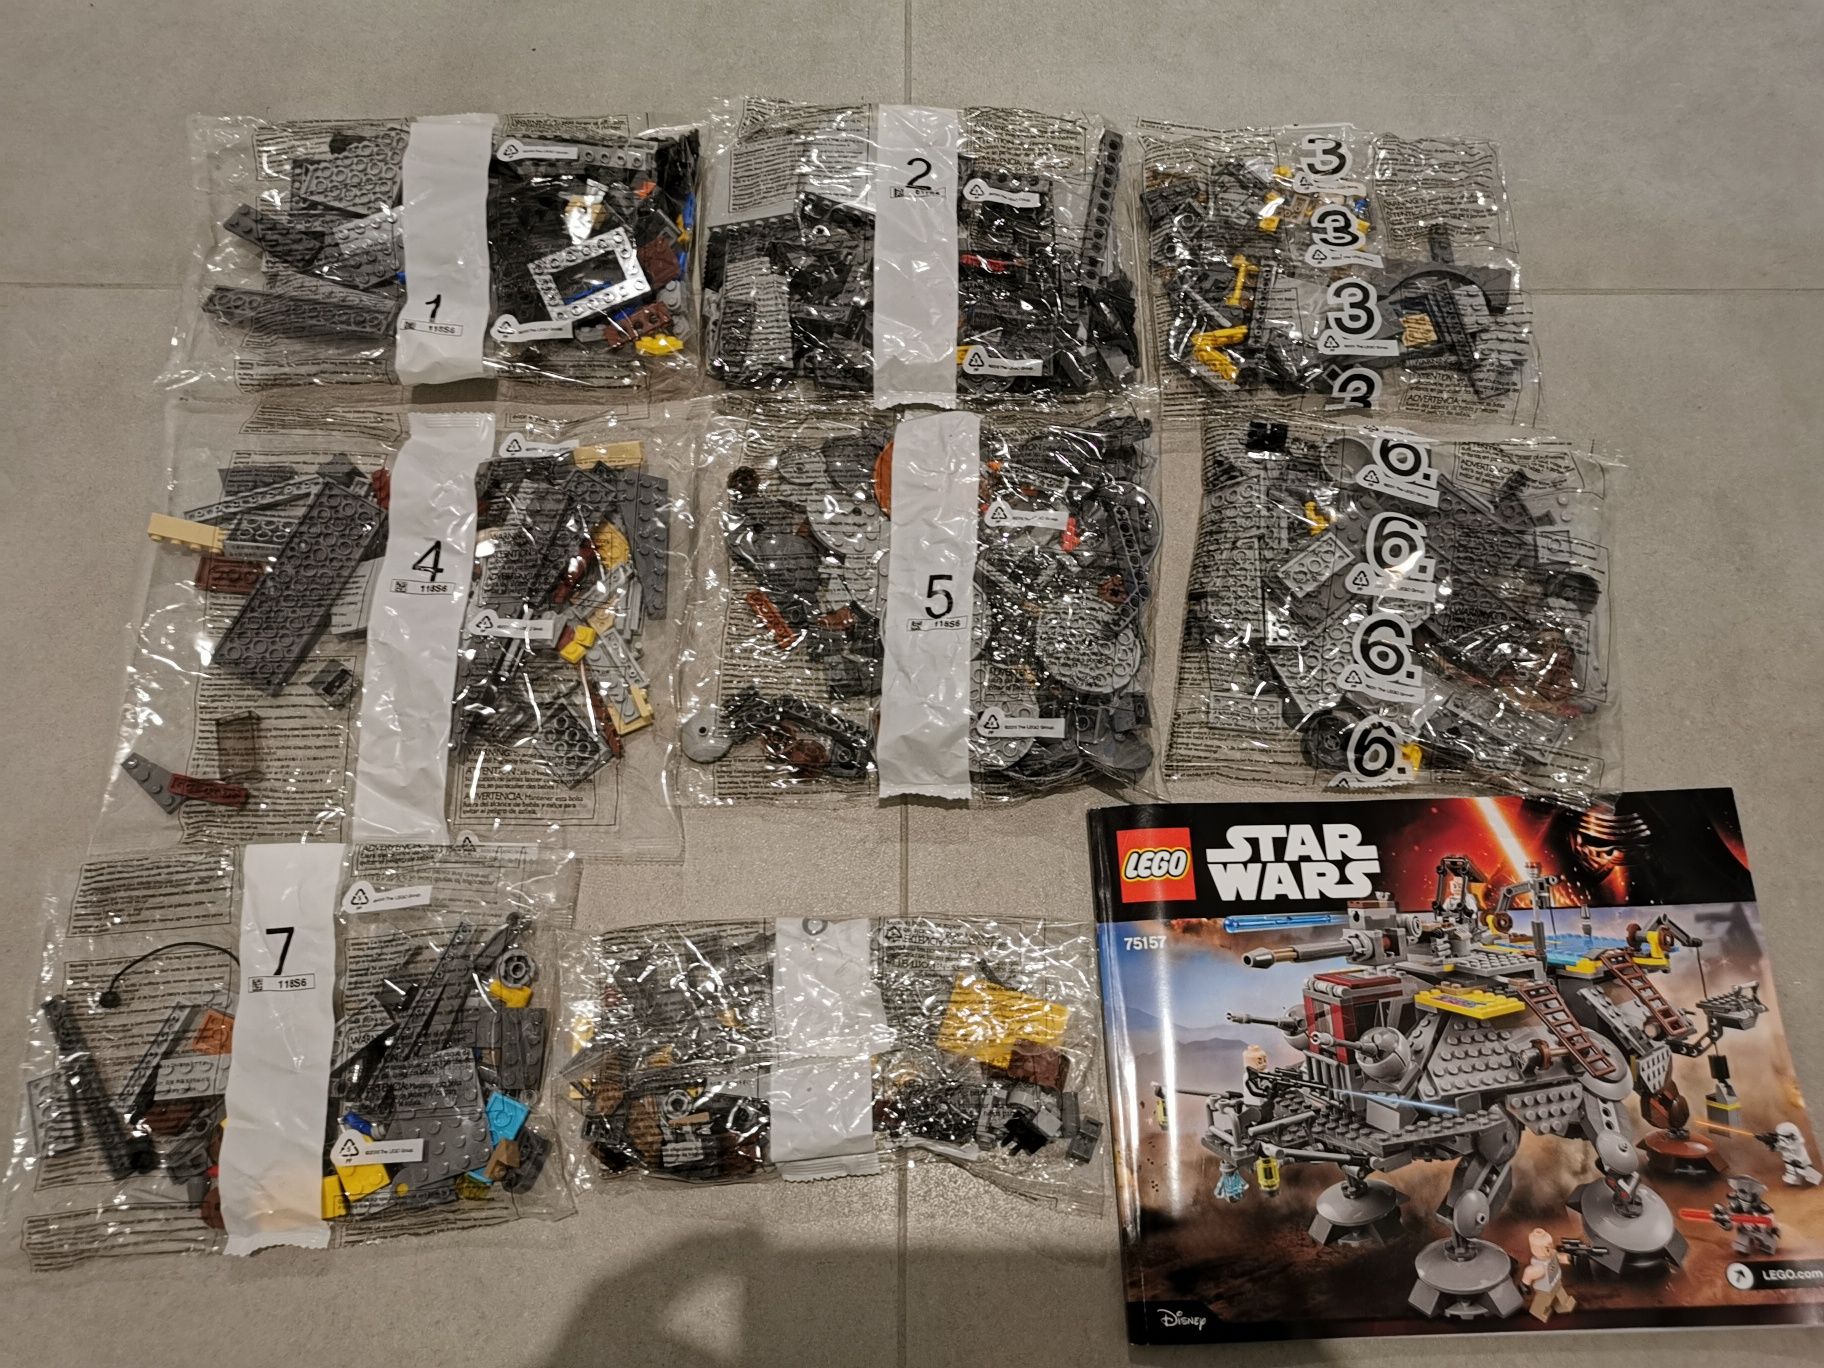 LEGO Star Wars 75157 AT-TE kapitana Rexa